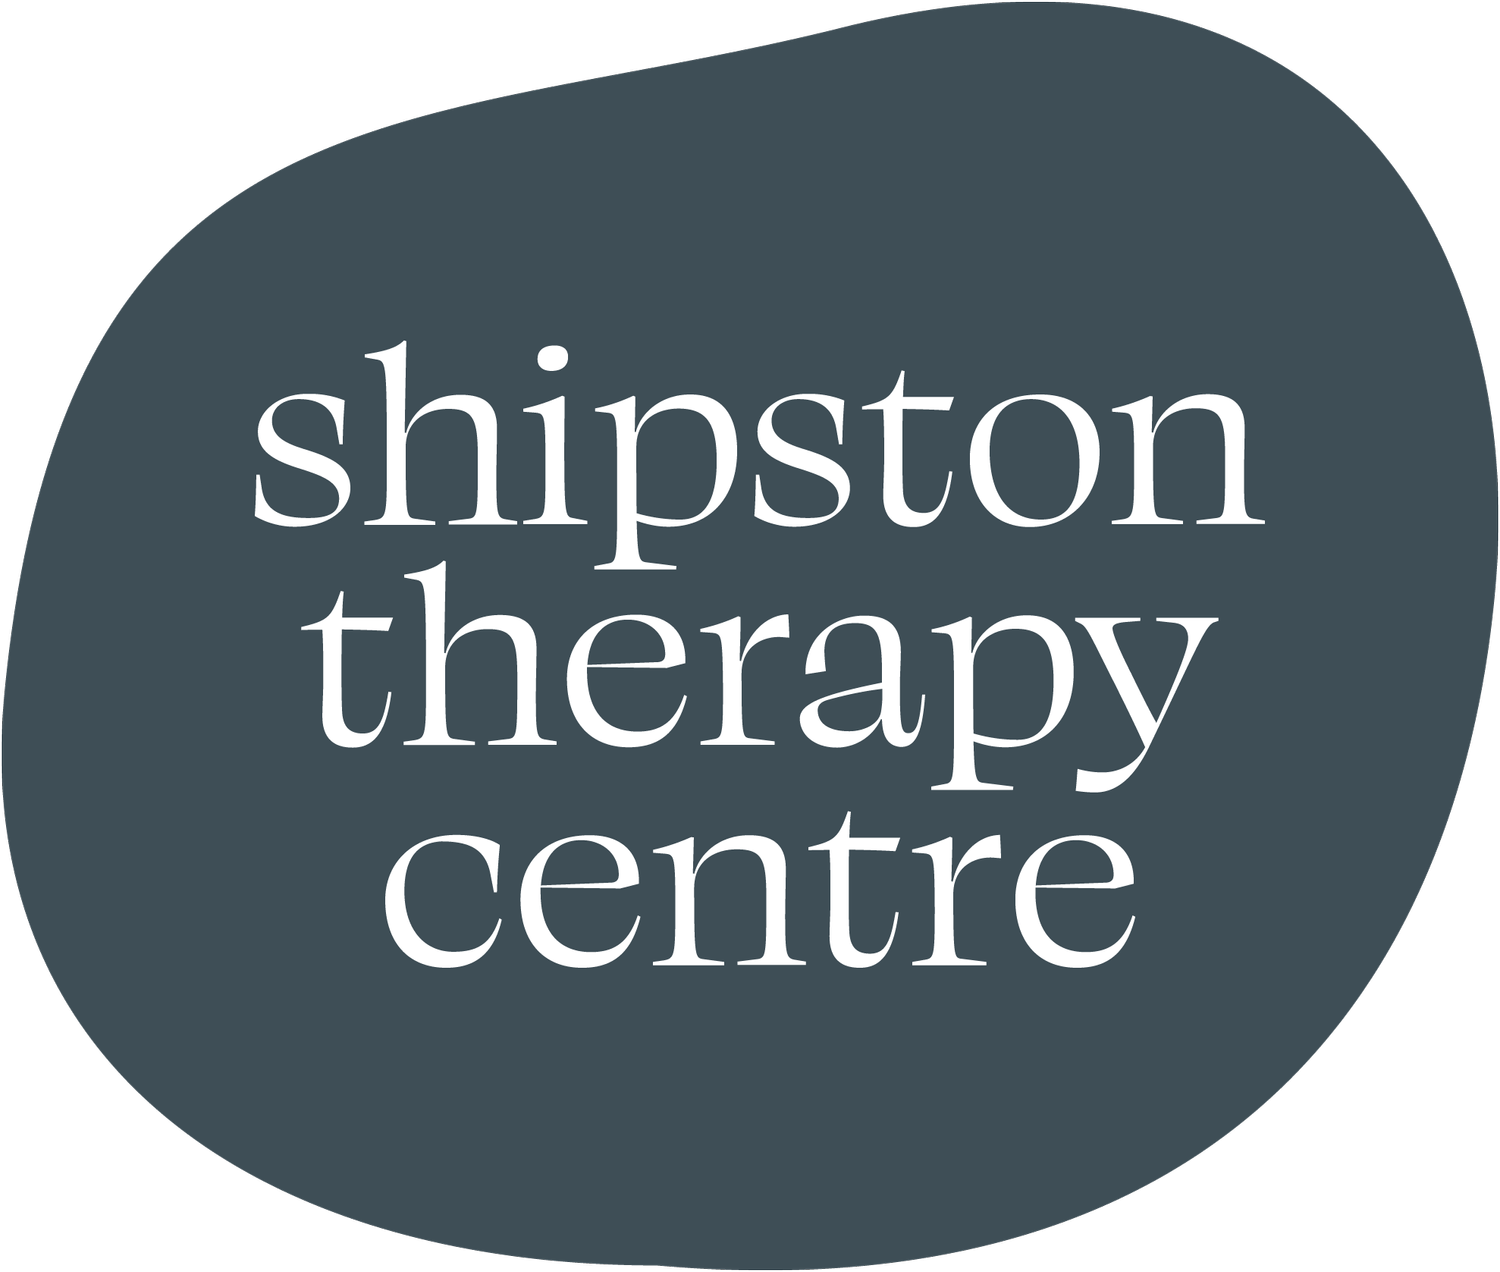 Shipston Therapy Centre